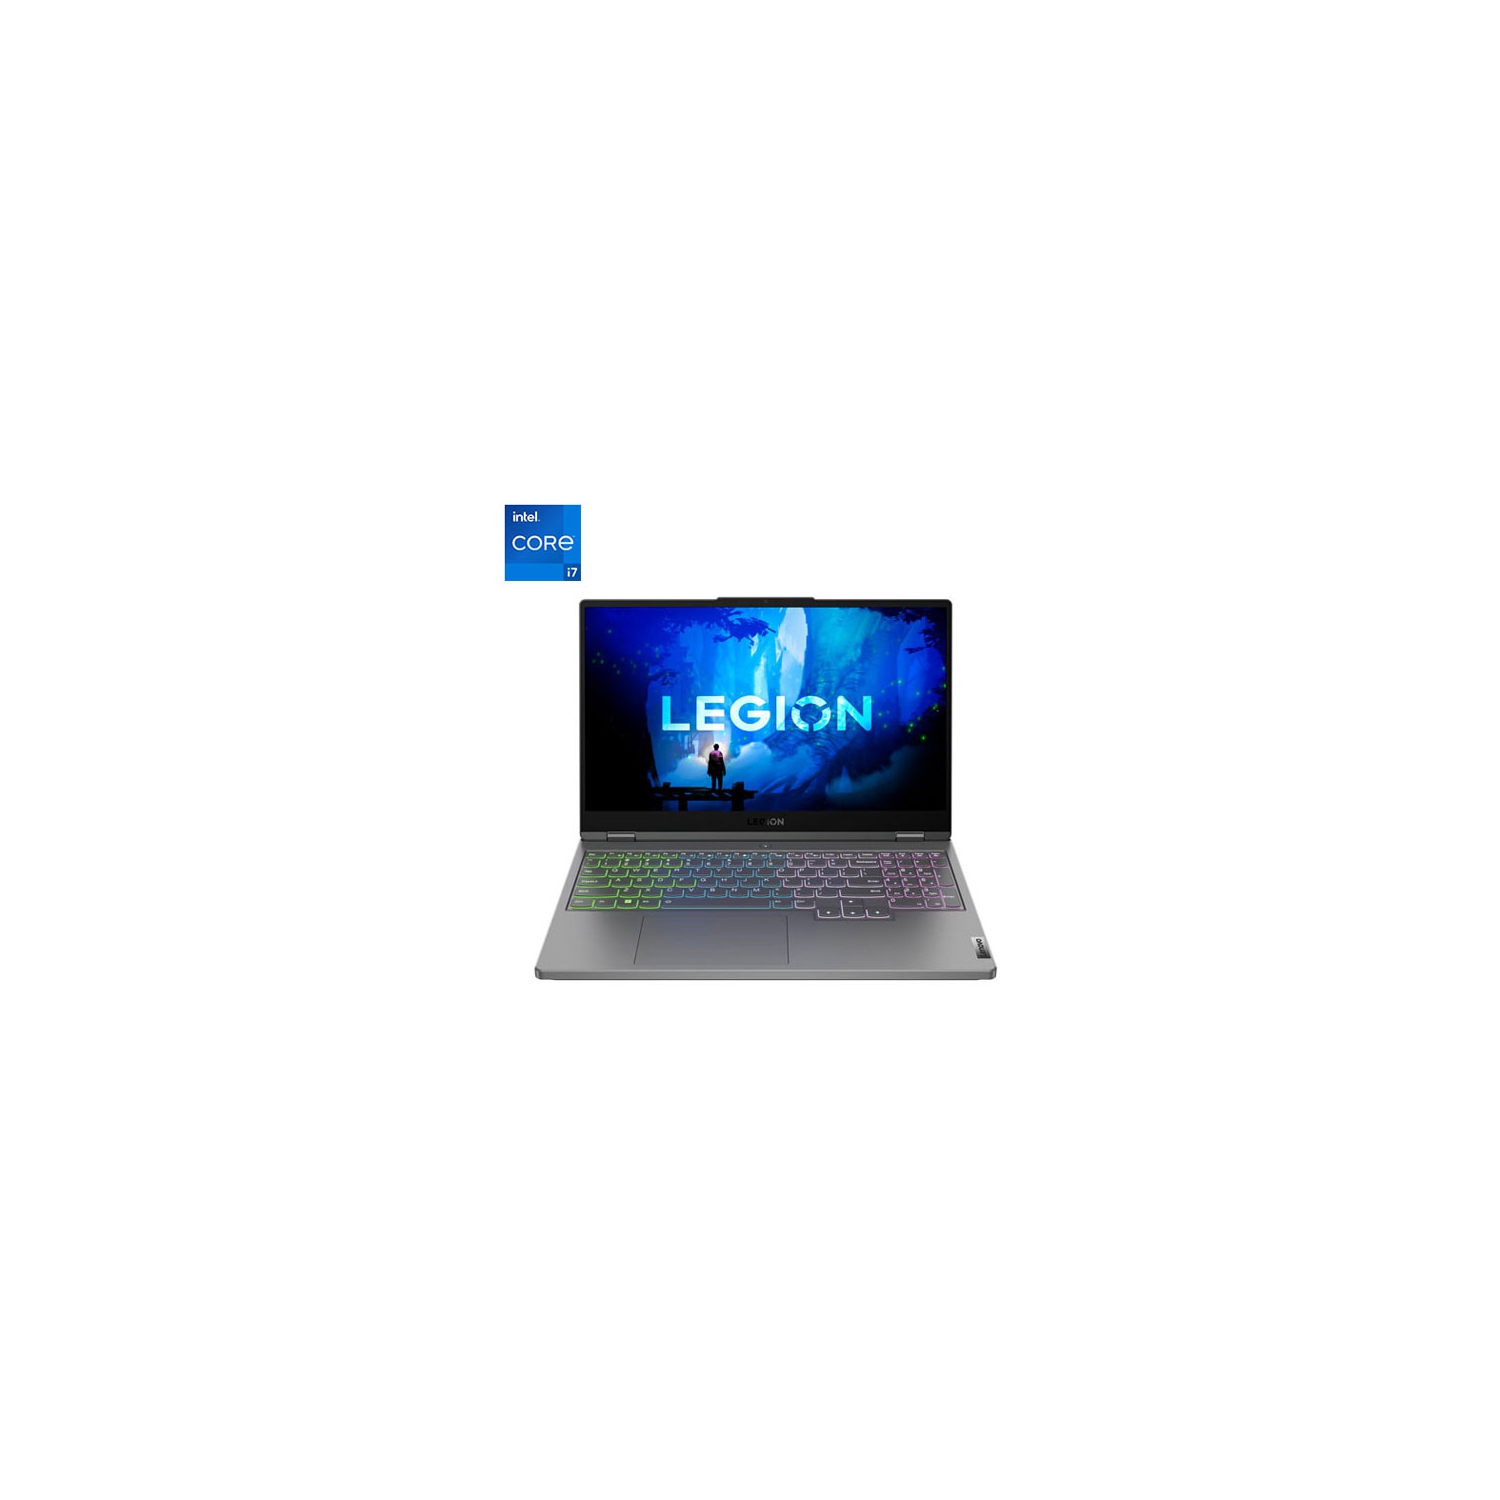 Refurbished (Good) - Lenovo Legion 5i 15.6" Gaming Laptop (Intel Core i7-12700H/512GB SSD/16GB RAM/RTX 3070 Ti/Win 11) - Eng